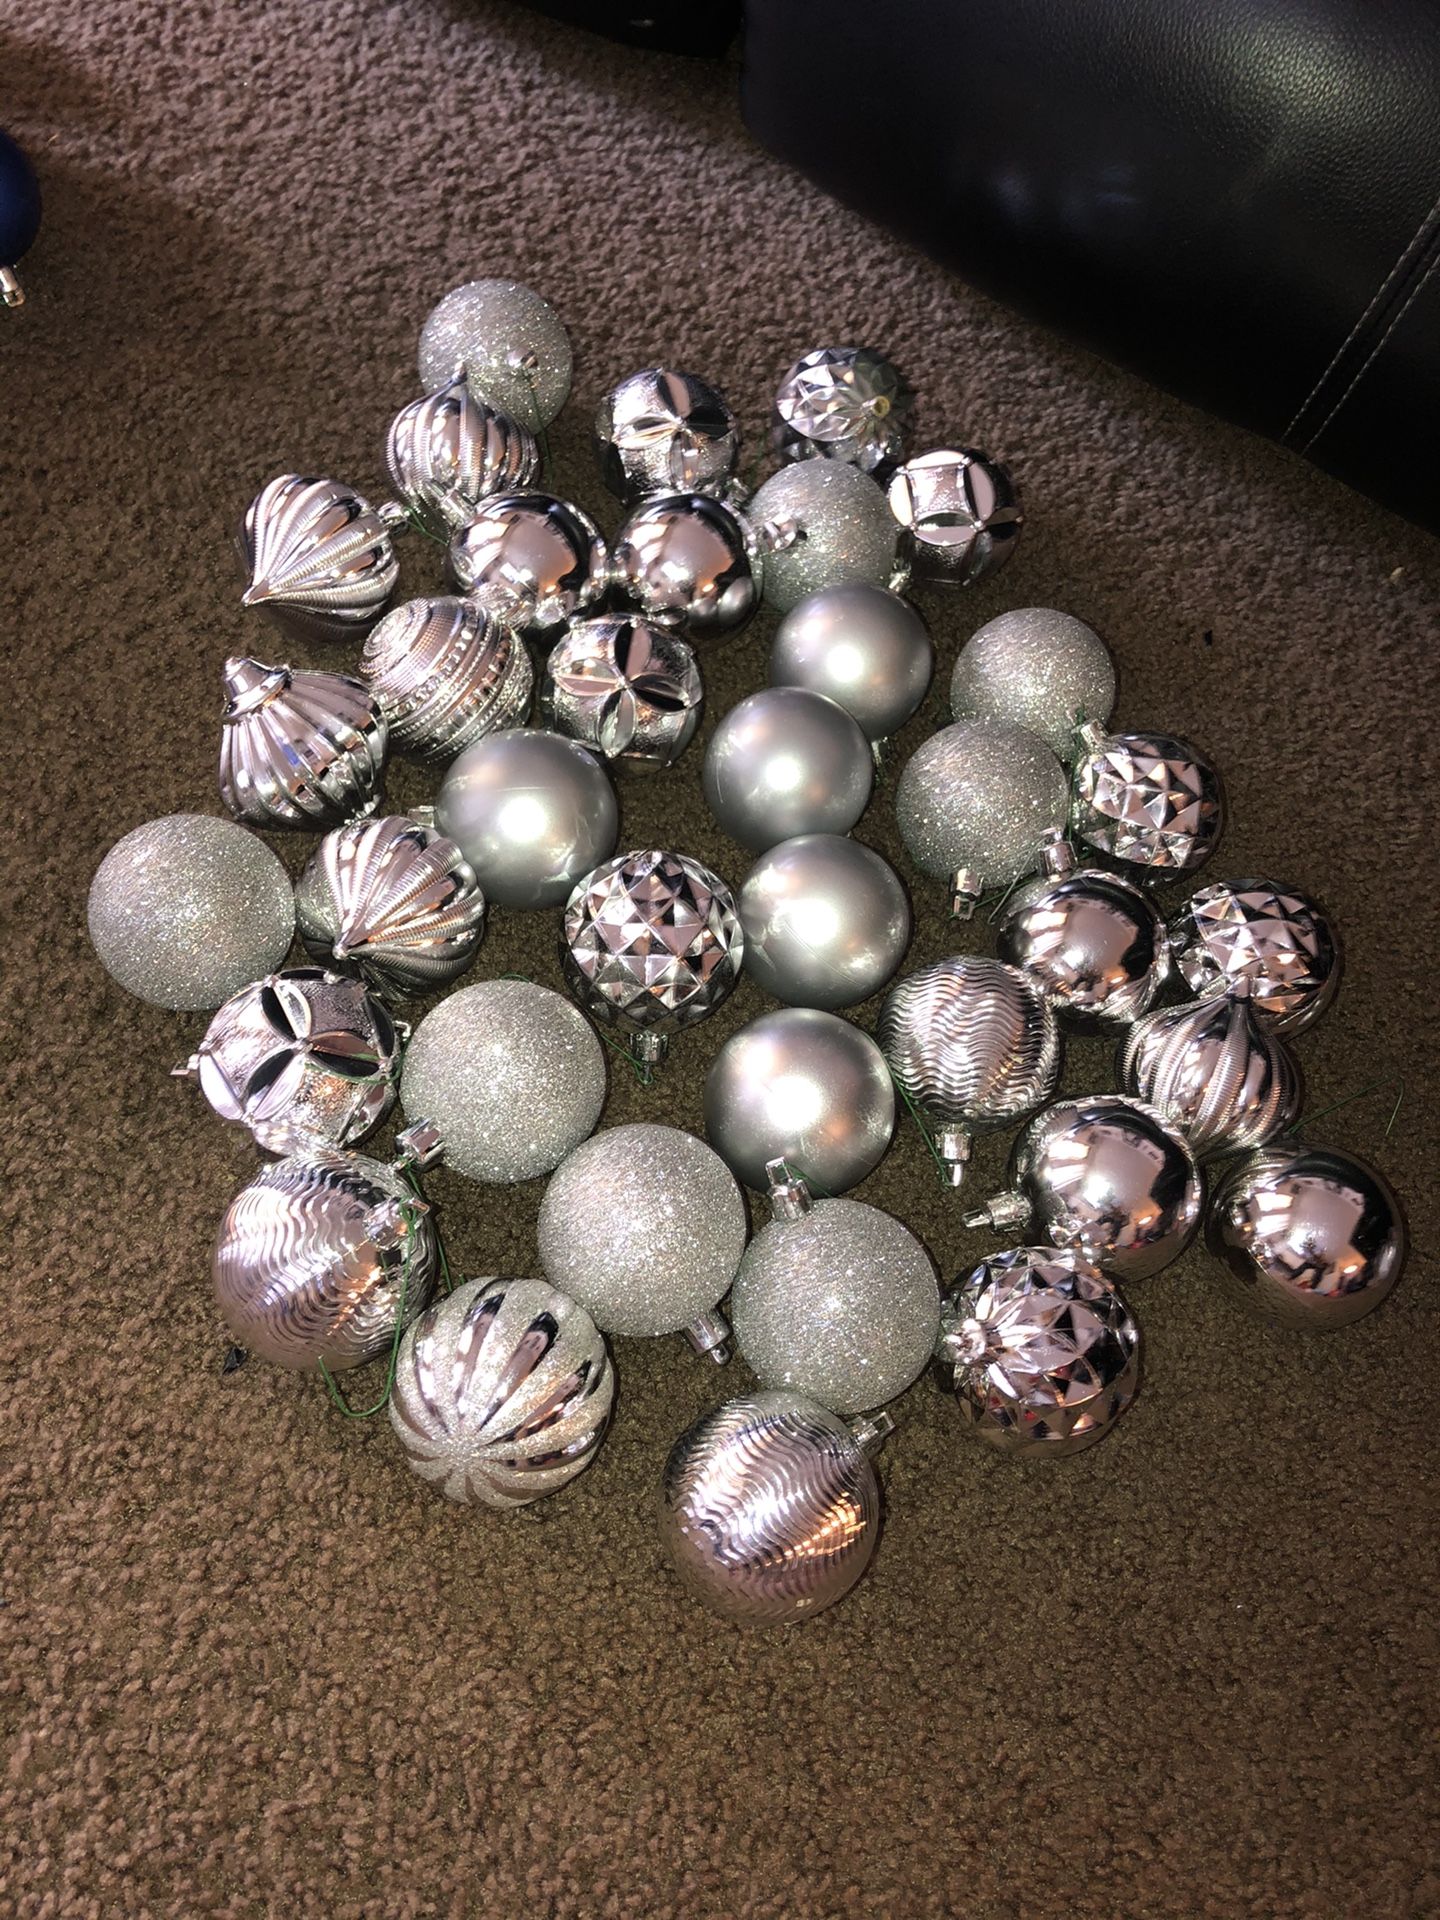 Silver tree ornaments